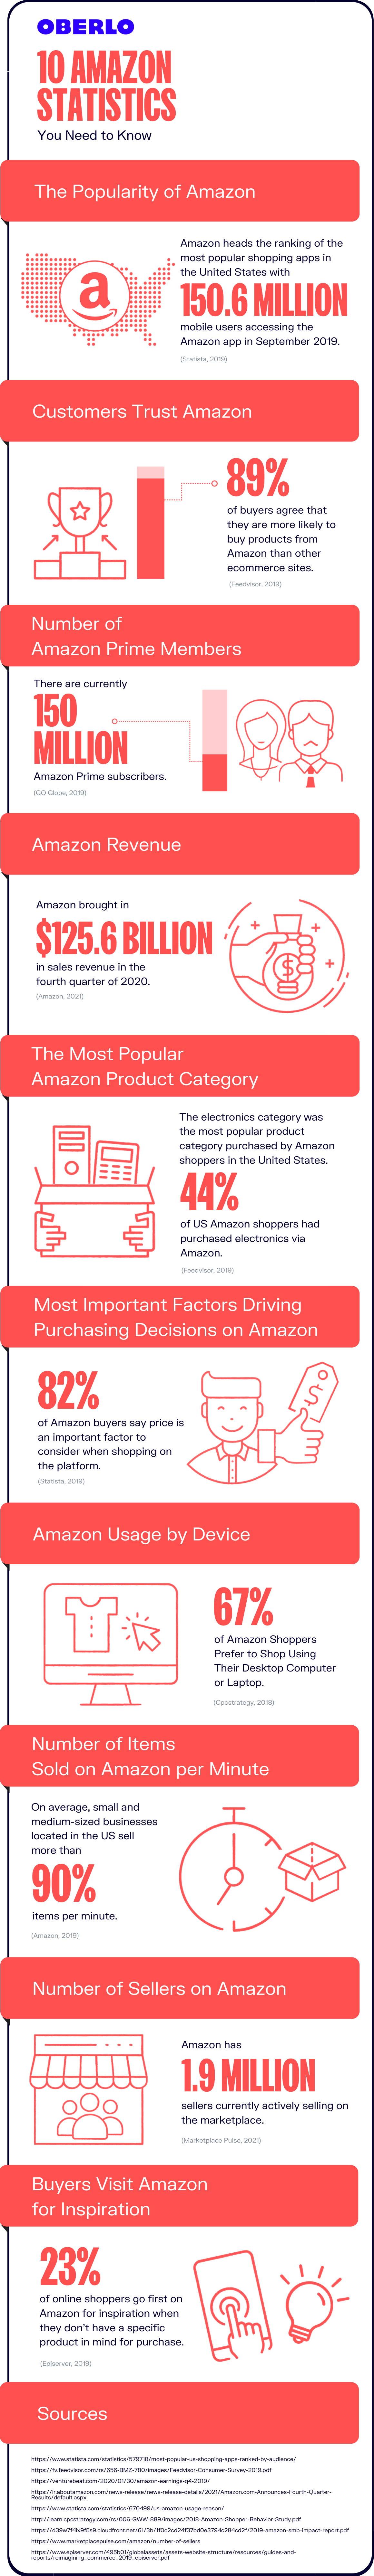 Amazon statistics full infographic